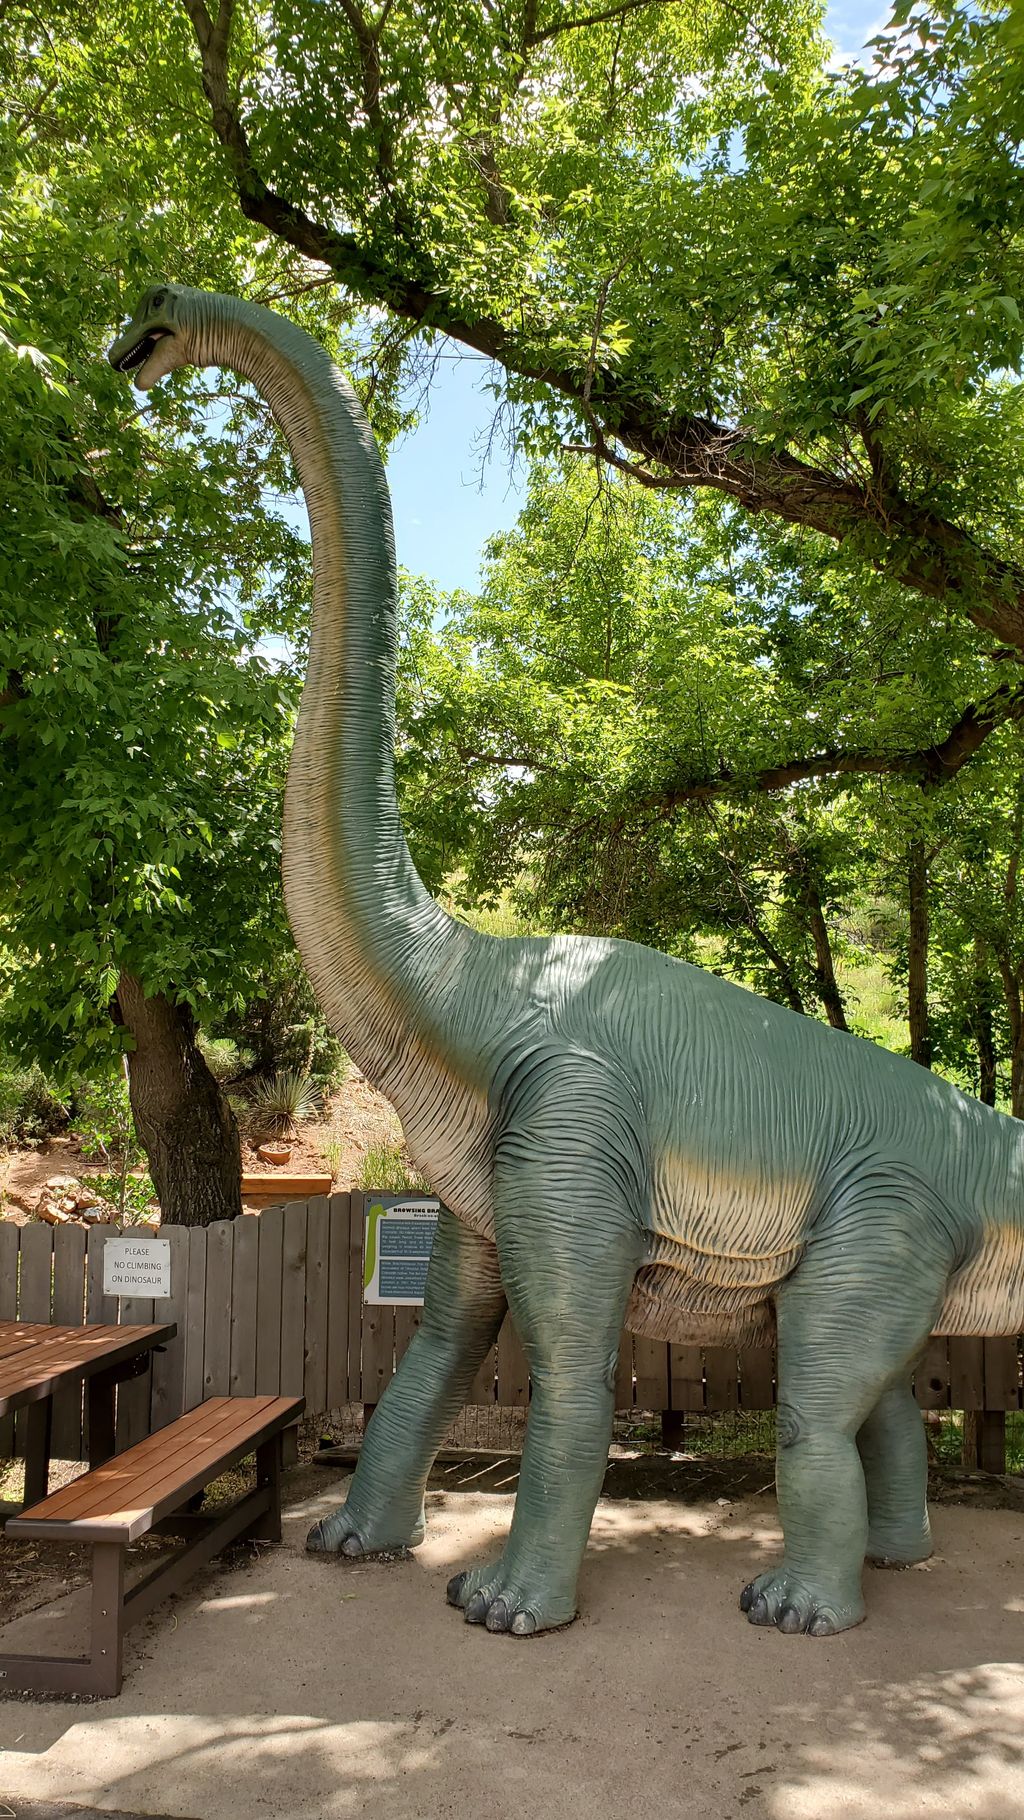 Dinosaur Ridge Discovery Center